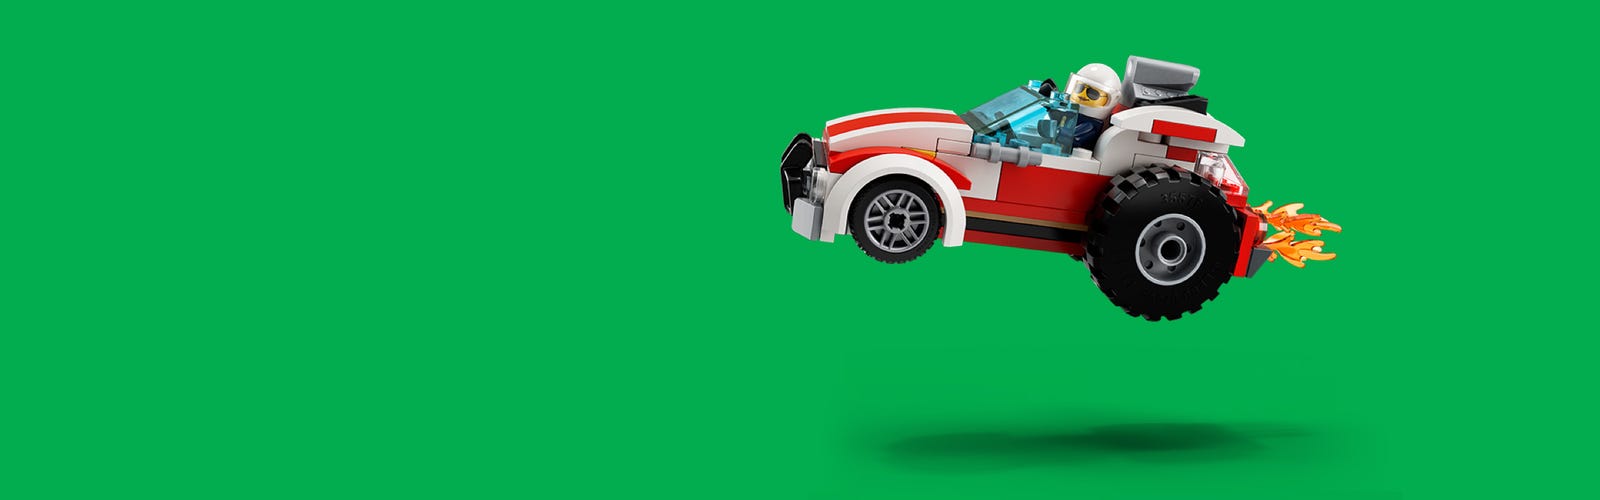 6 Best Lego Technic Ferrari Sets » Lego Sets Guide